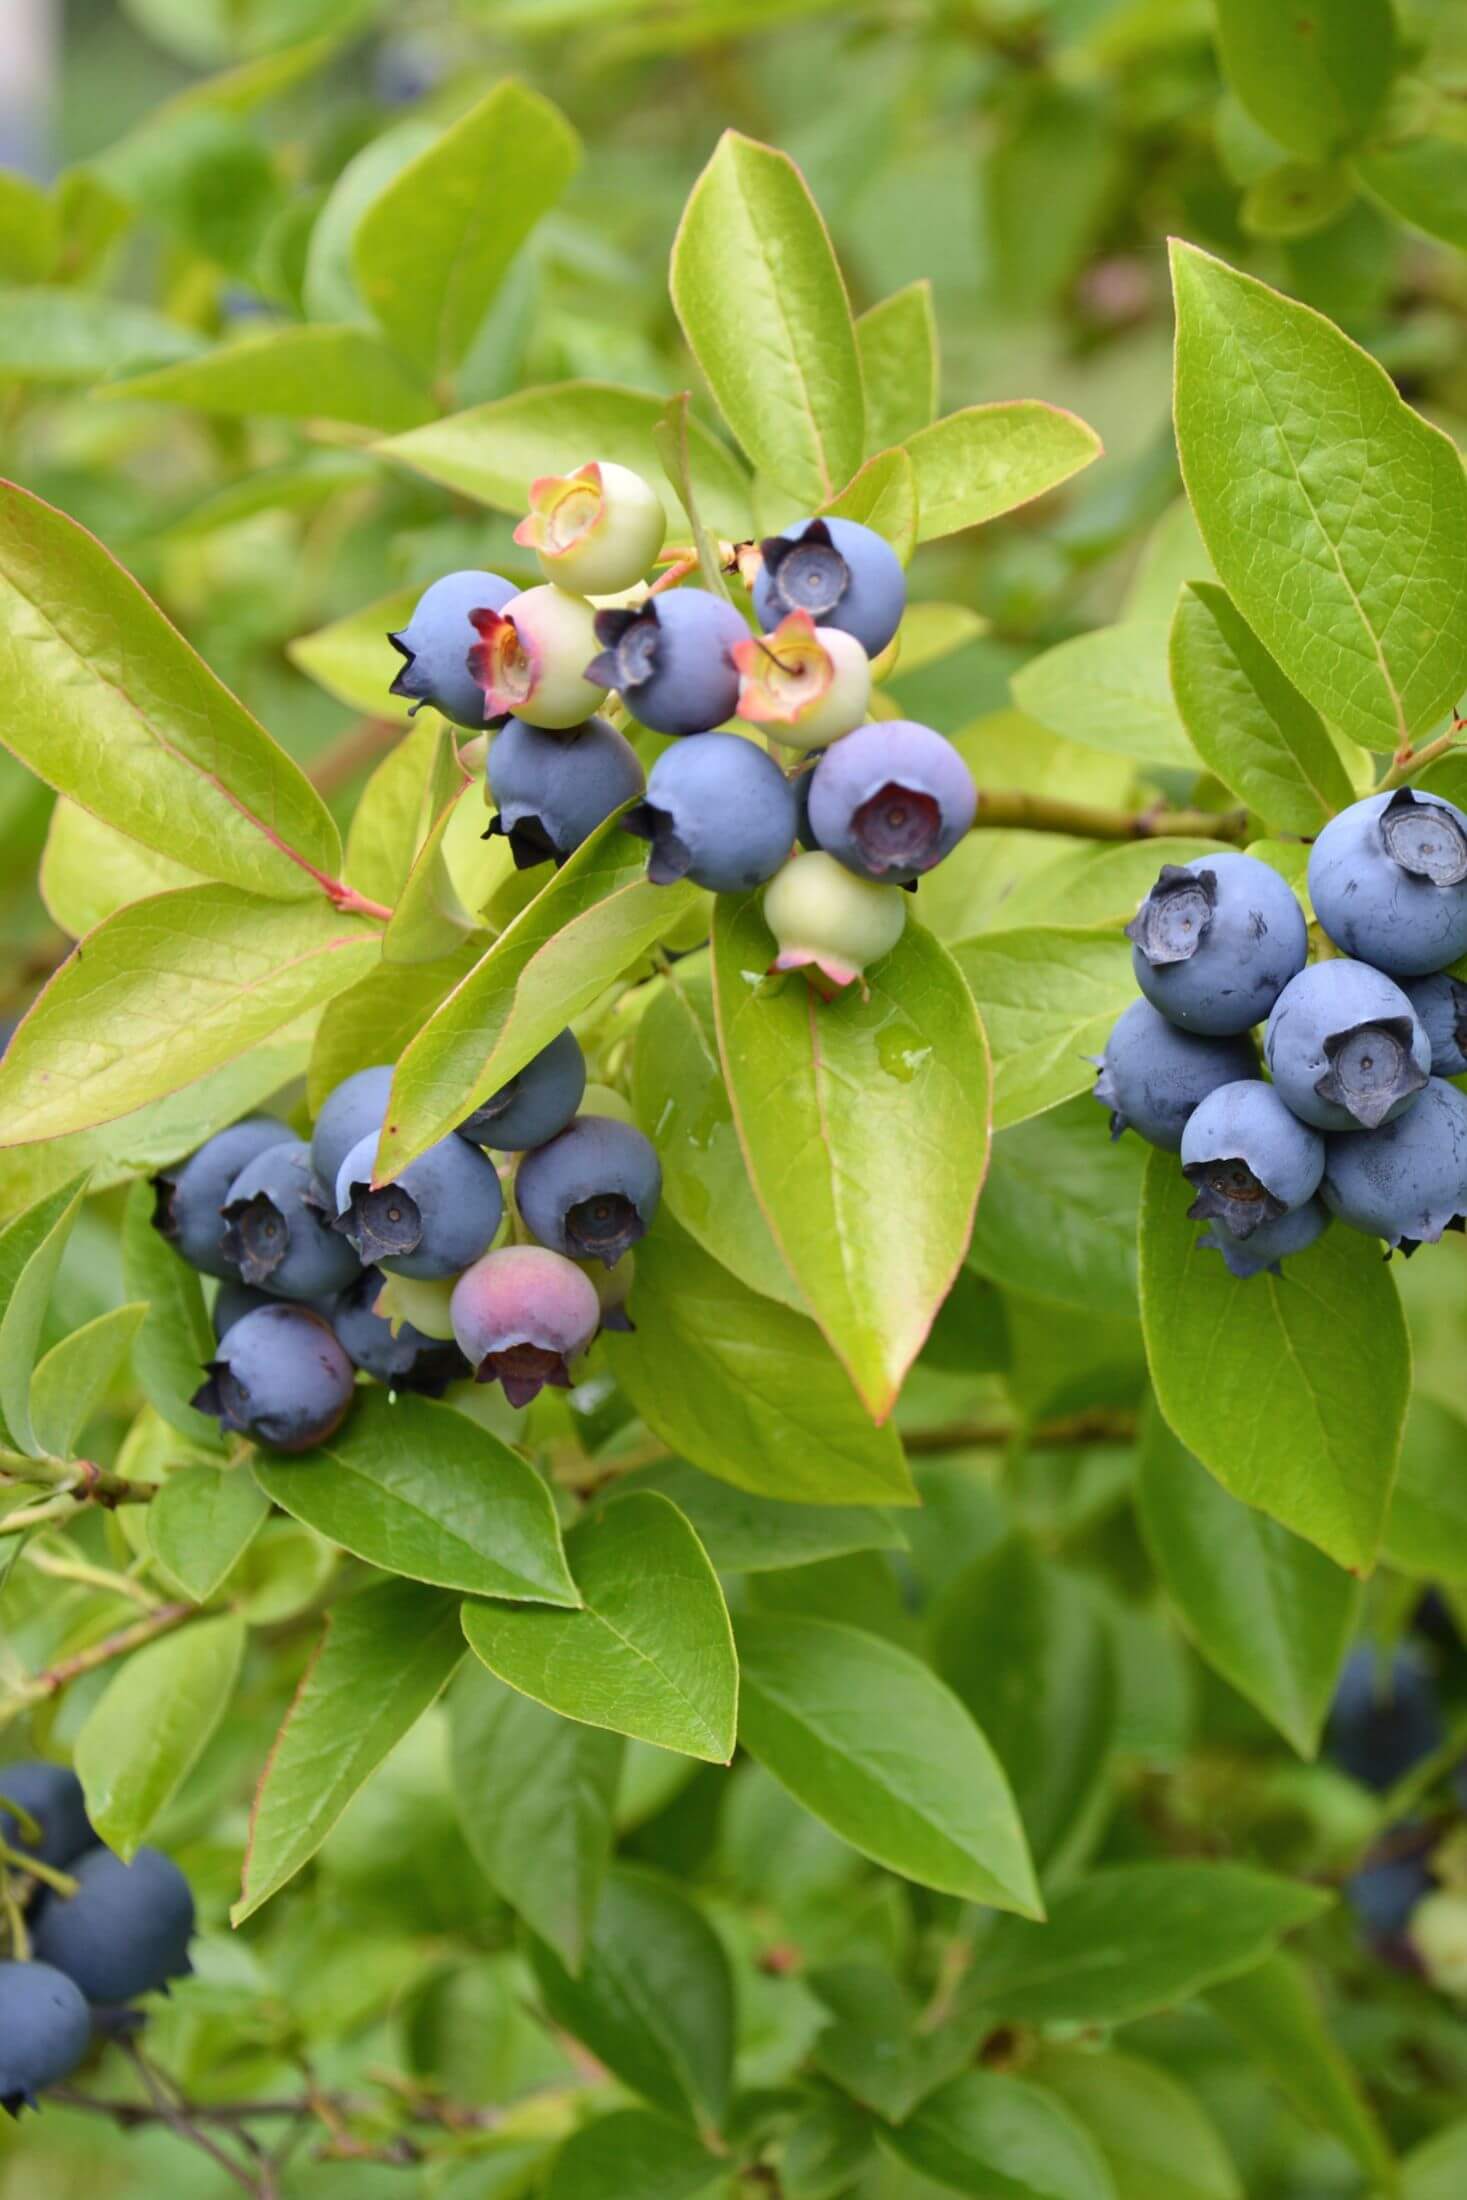 Blueberries on a shrub. 